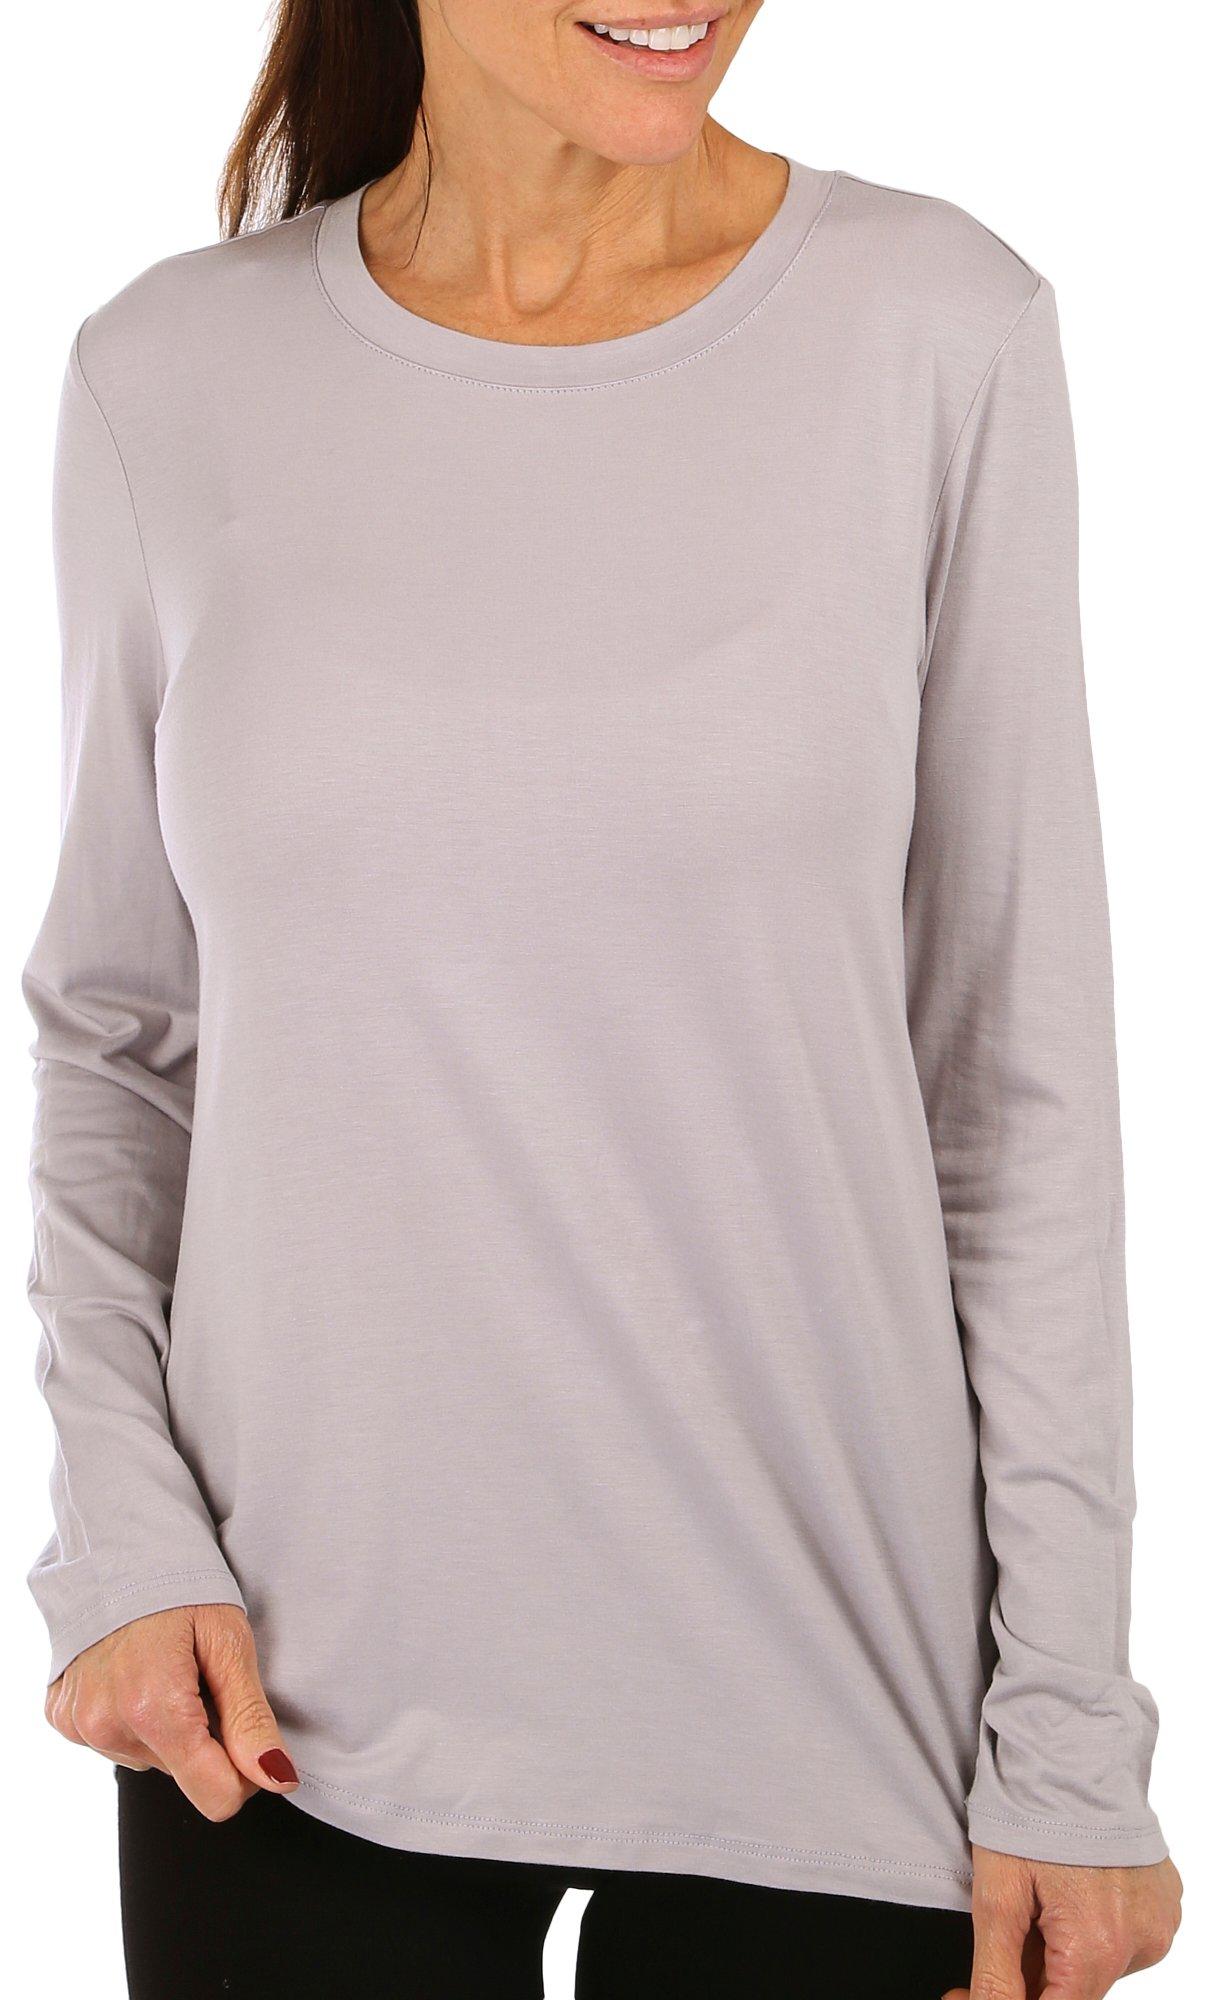 Reel Legends Womens UPF 50 Solid Long Sleeve Top - Light Grey - Large